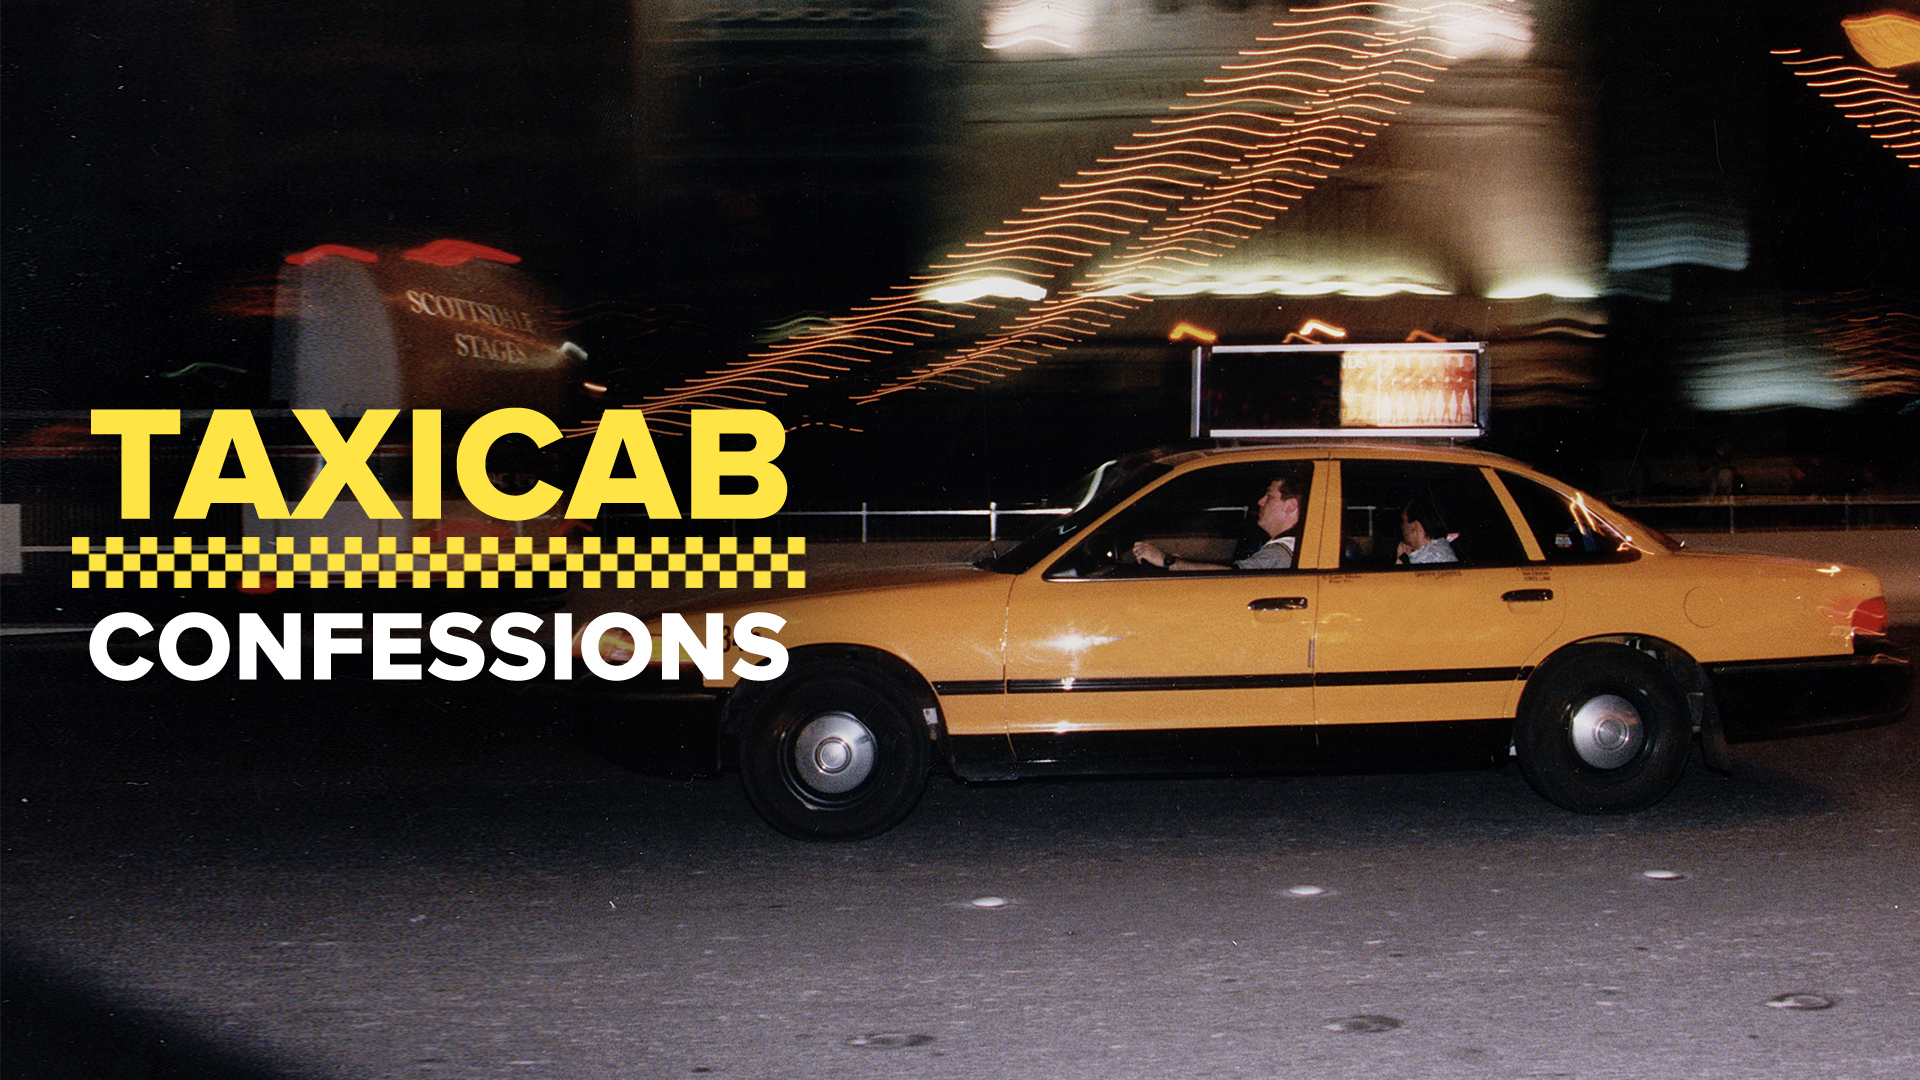 arlette tejada recommends Watch Taxi Cab Confessions